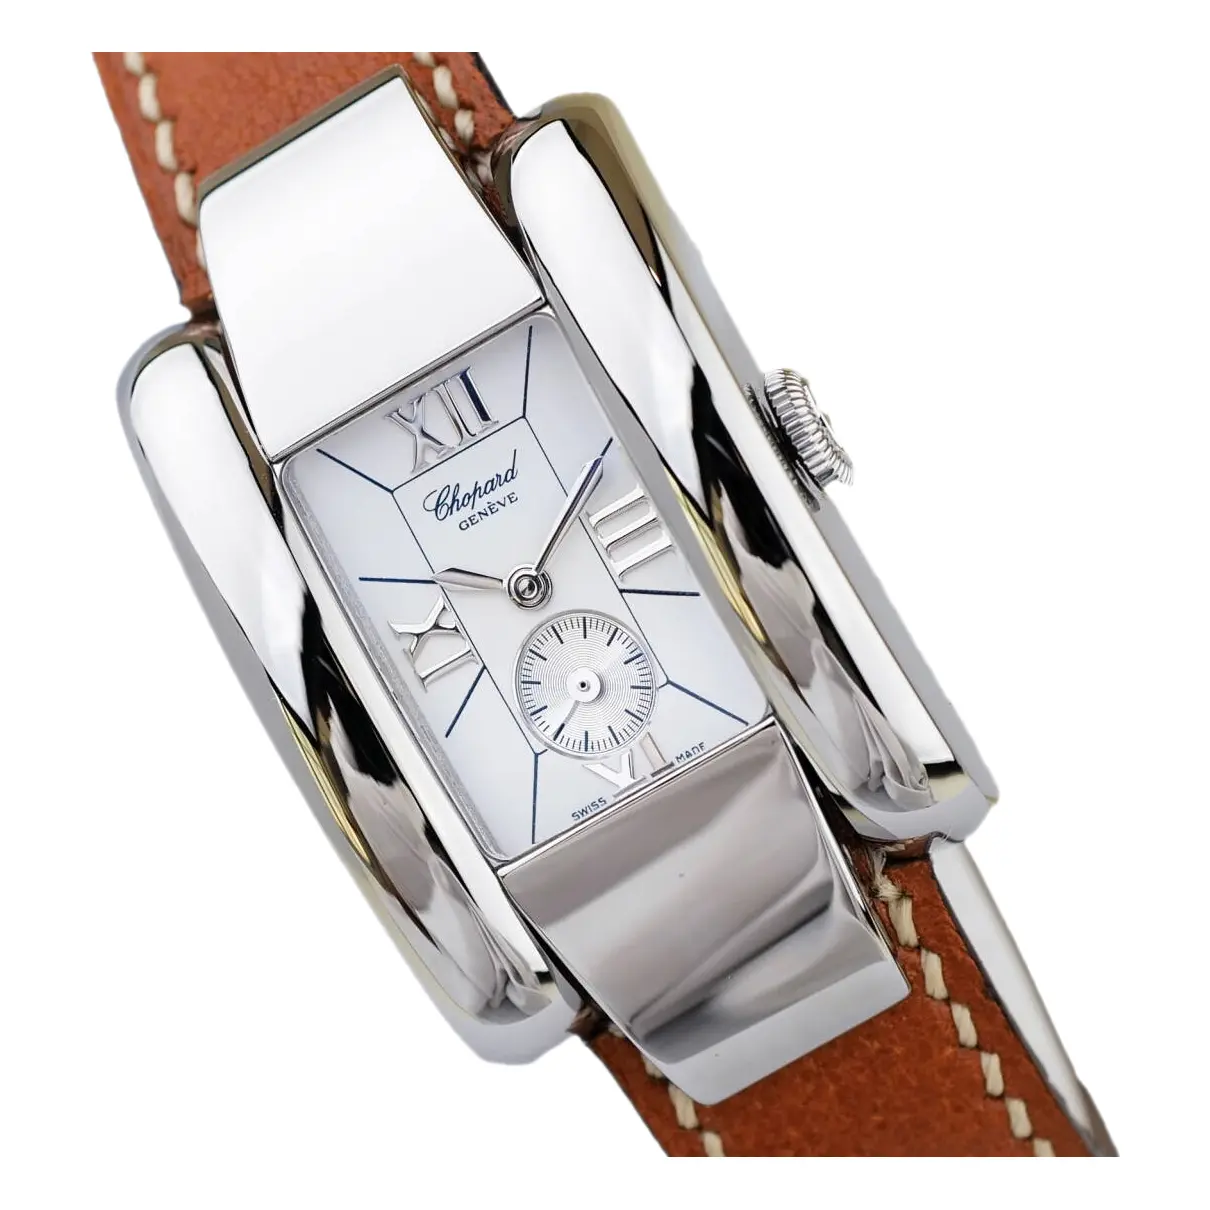 La Strada silver gilt watch